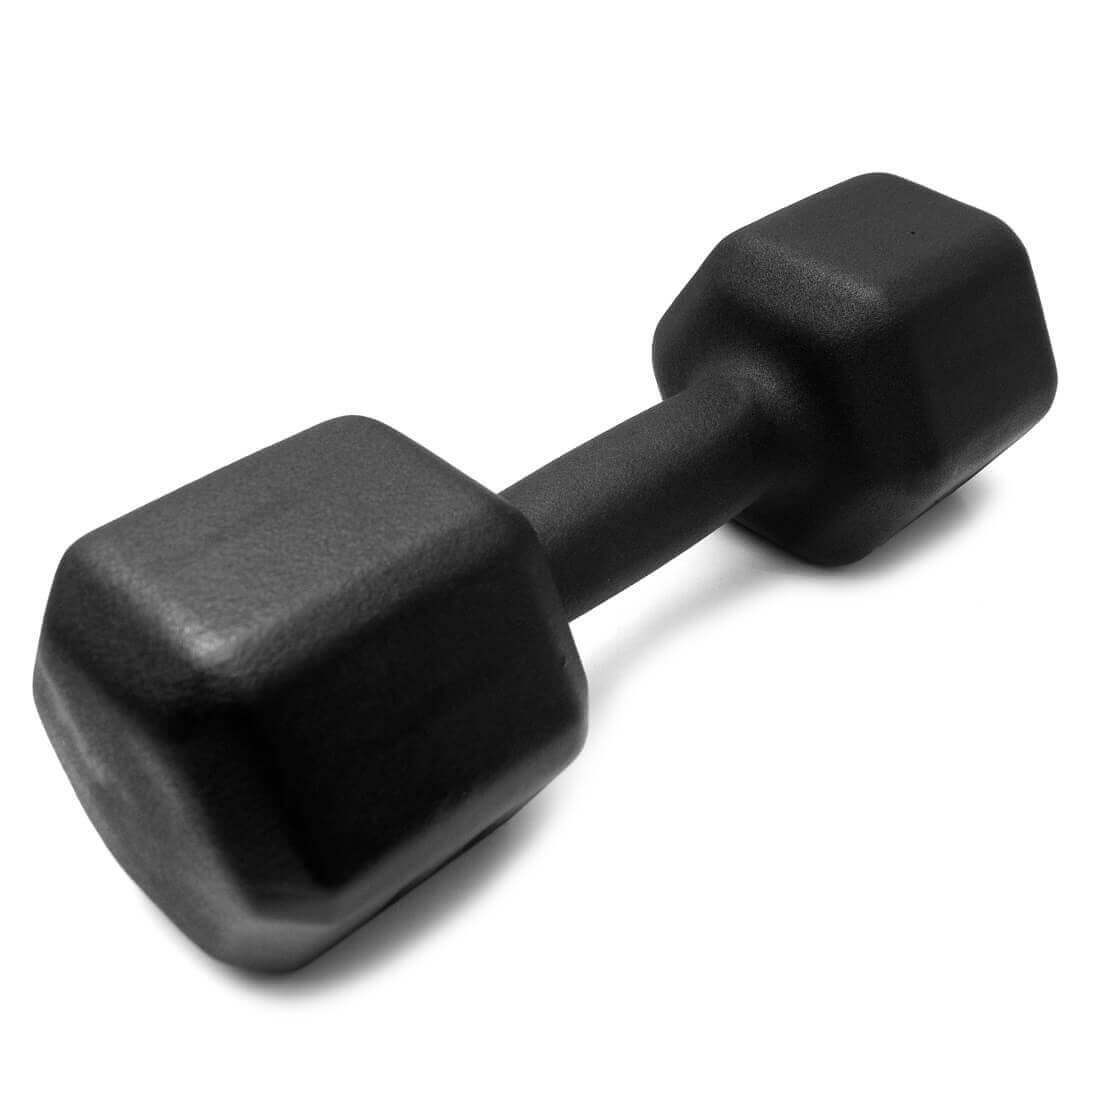 Dumbbell - Halter Sextavado de Ferro Com Revestimento Emborrachado 22,5 kg - Rae Fitness